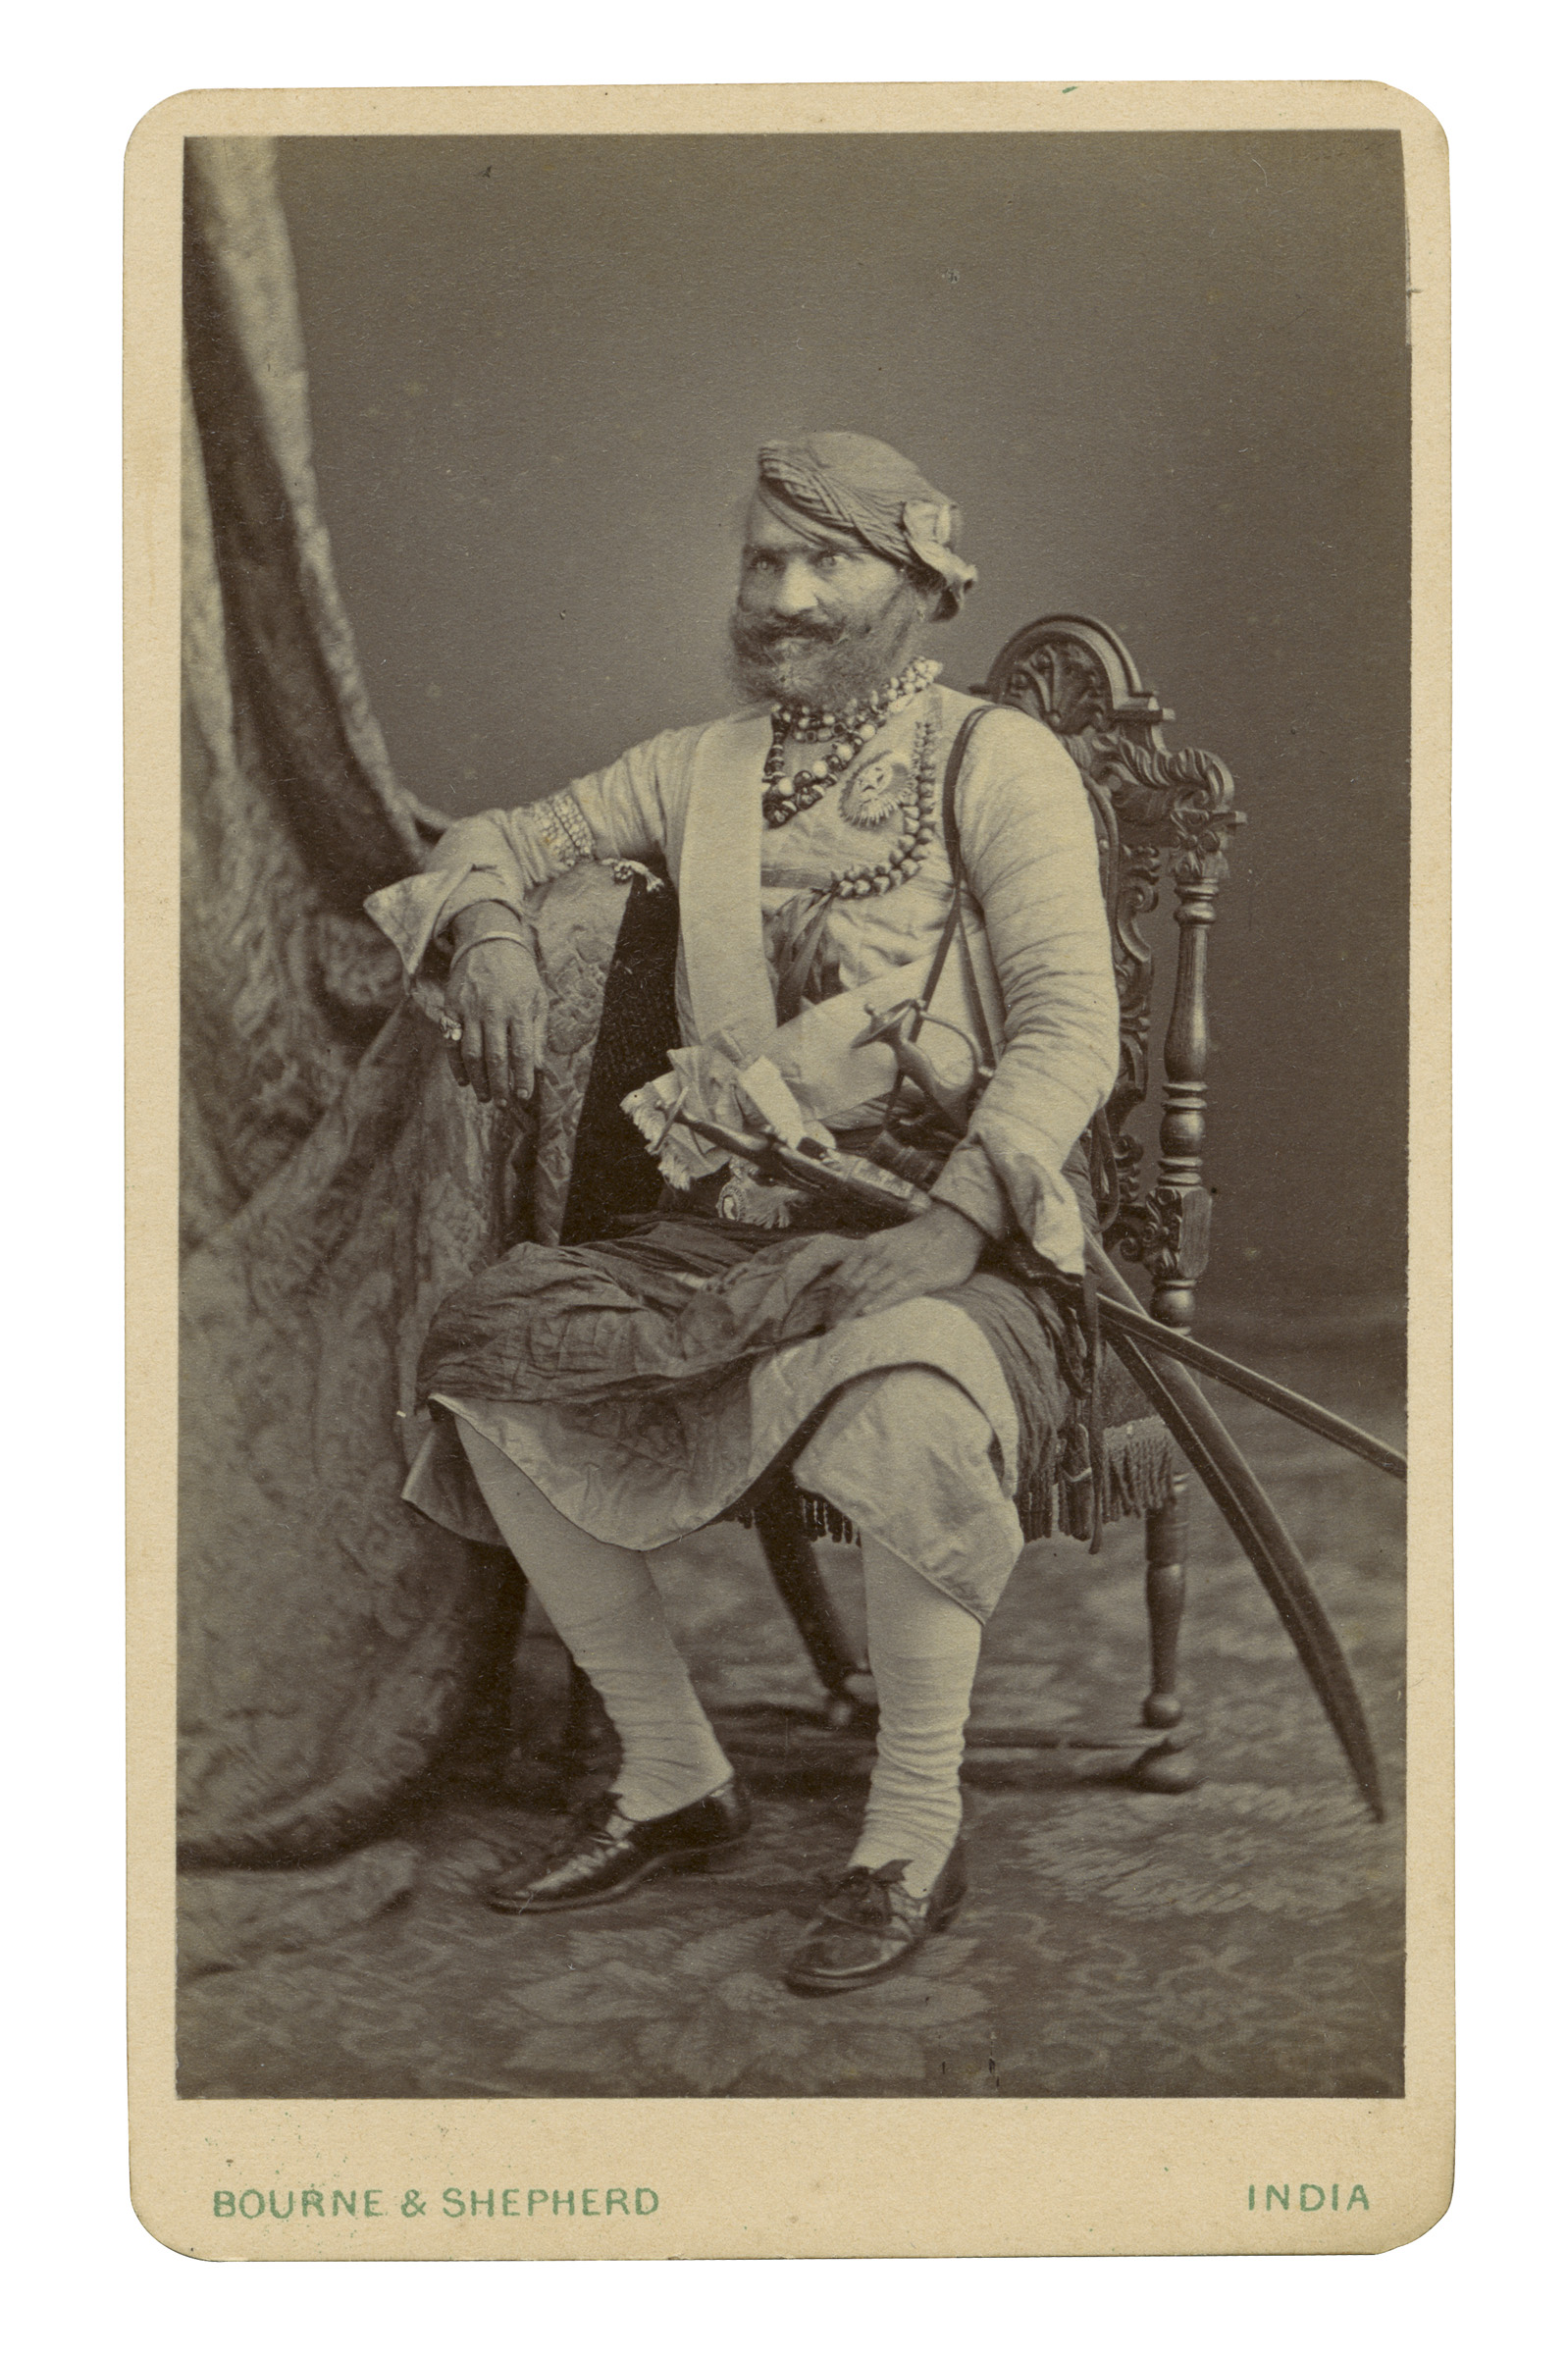 Maharaja Bhagwant Singh